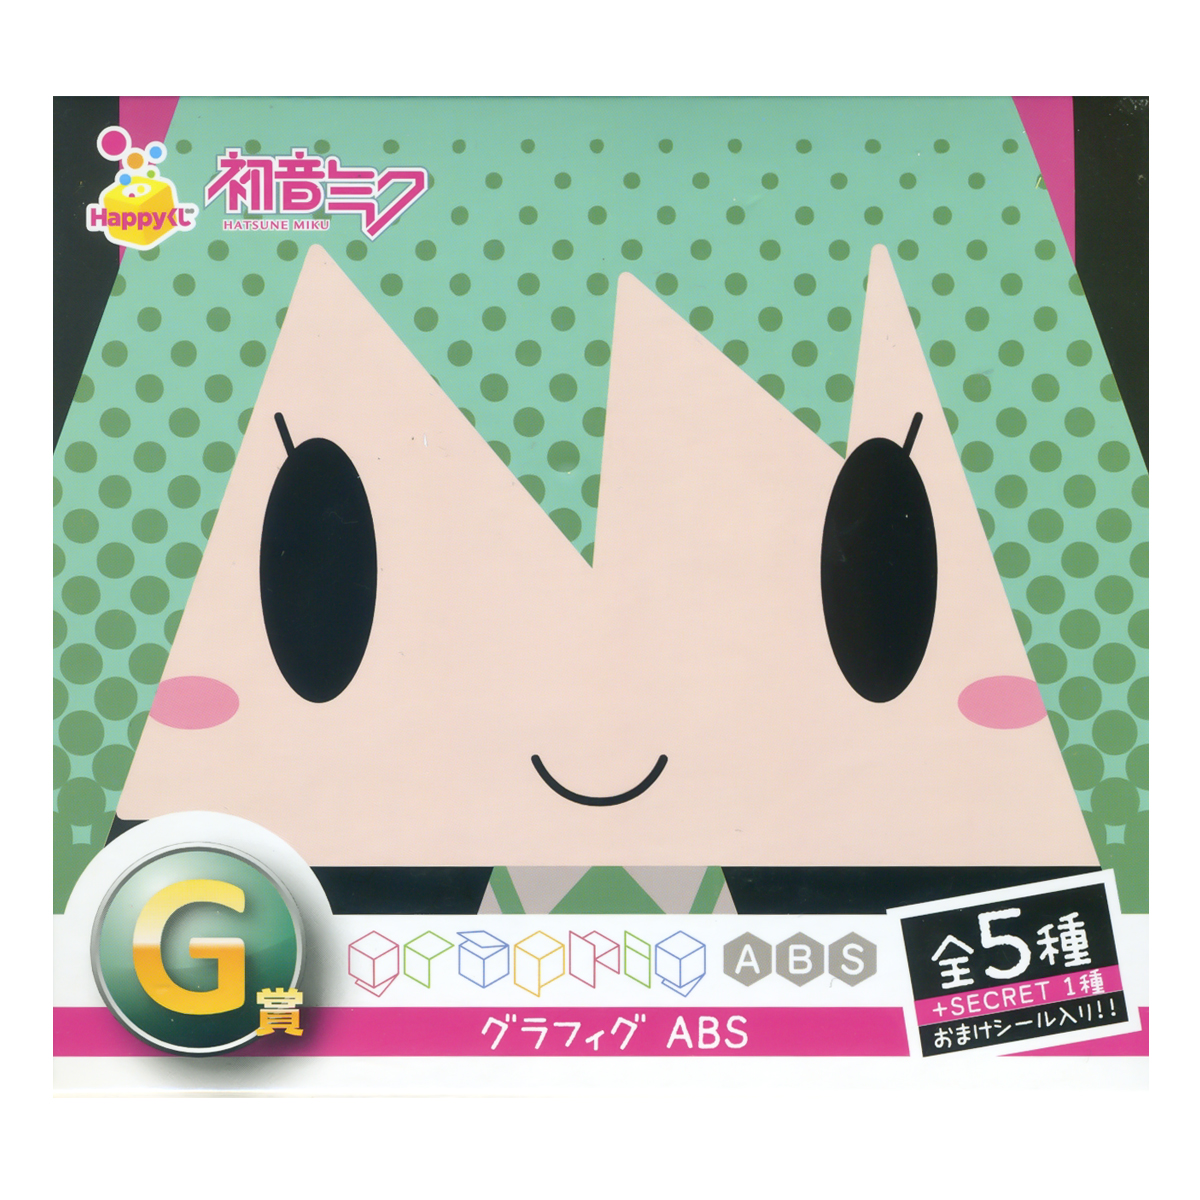 Vocaloid Trading Figure G Prize Miku Happy Kuji Anime Random Blind Box